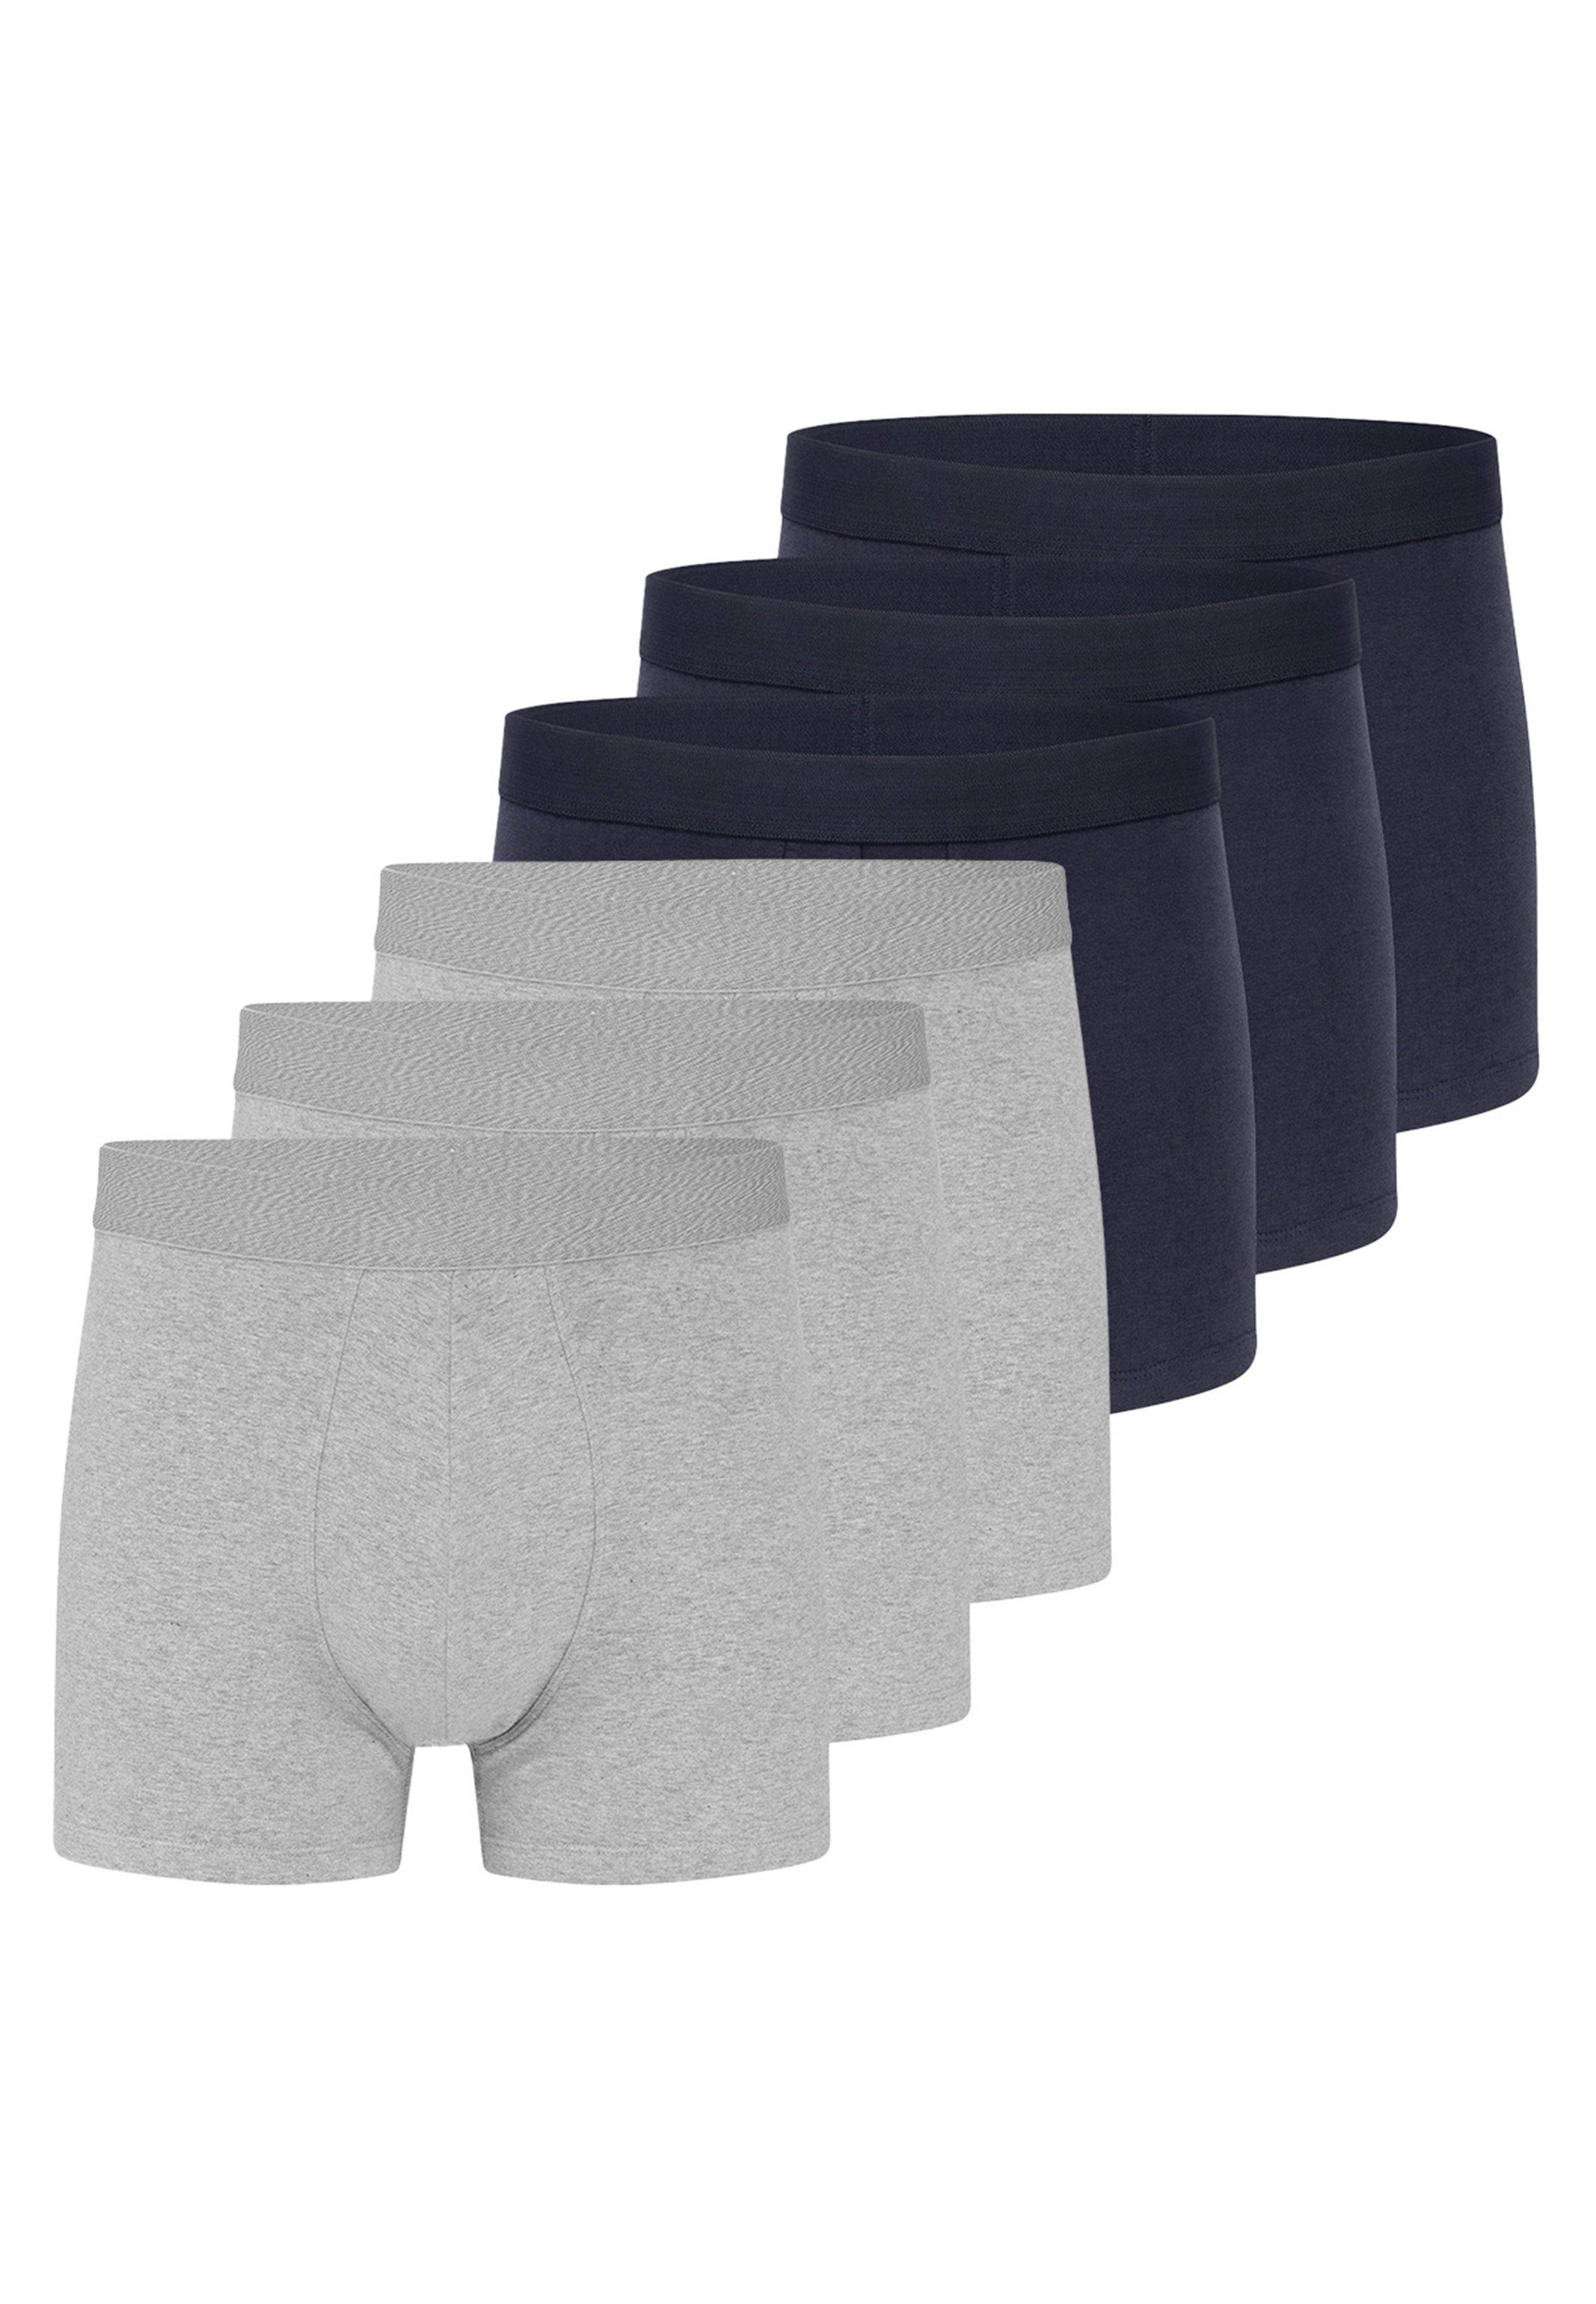 Almonu Retro Boxer 6er Pack Organic Cotton (Spar-Set, 6-St) Retro Short / Pant - Baumwolle - Ohne Eingriff - Atmungsaktiv